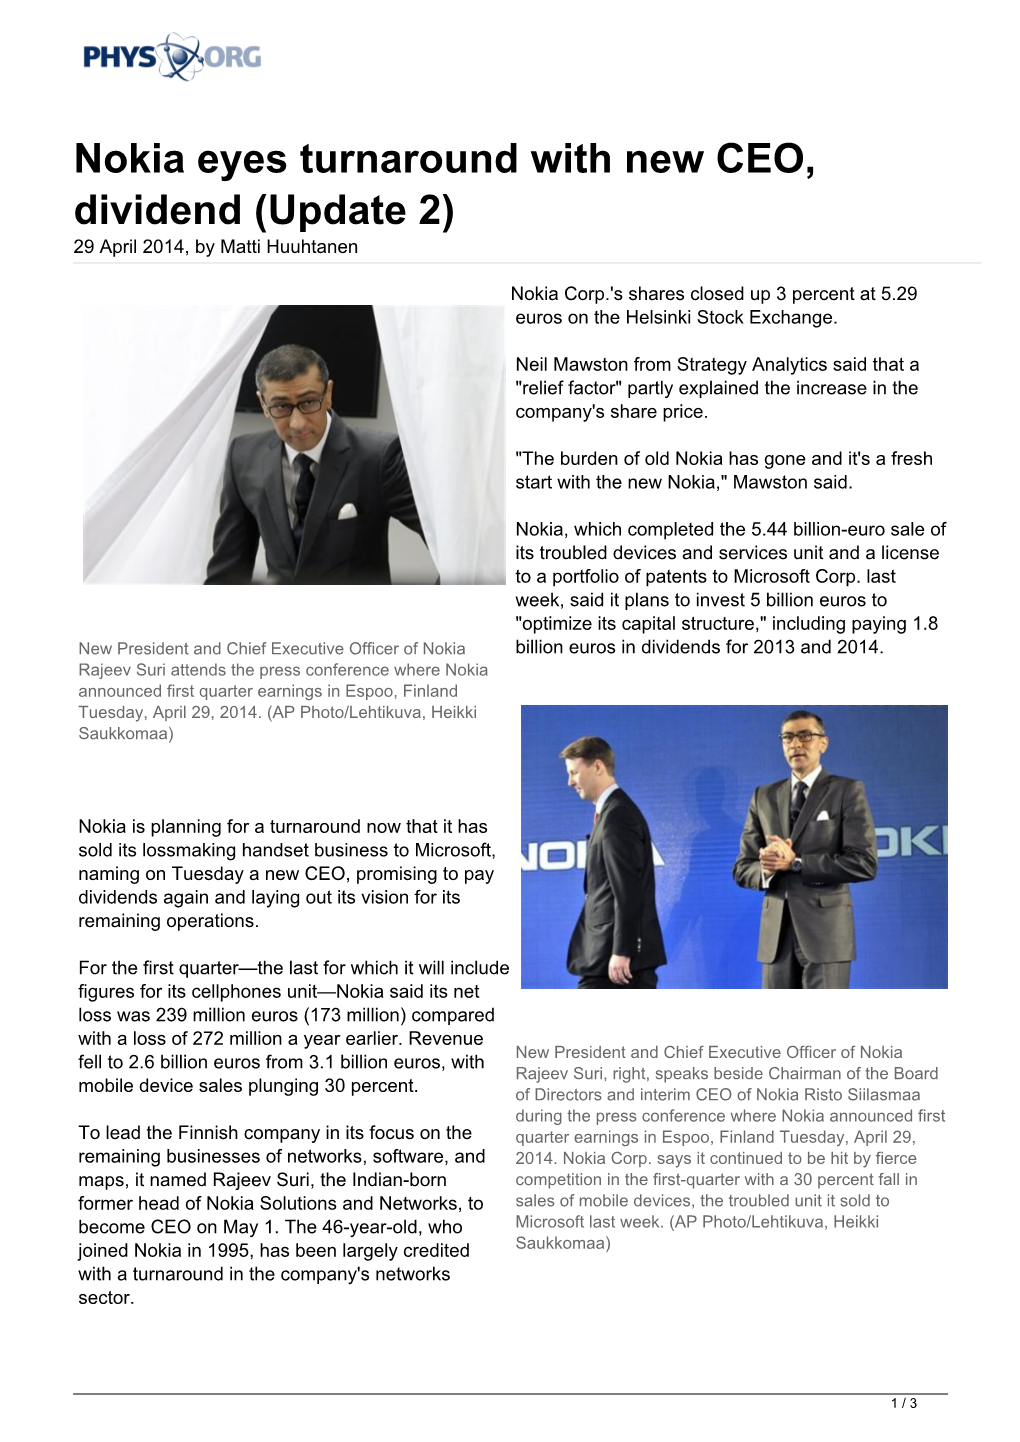 Nokia Eyes Turnaround with New CEO, Dividend (Update 2) 29 April 2014, by Matti Huuhtanen